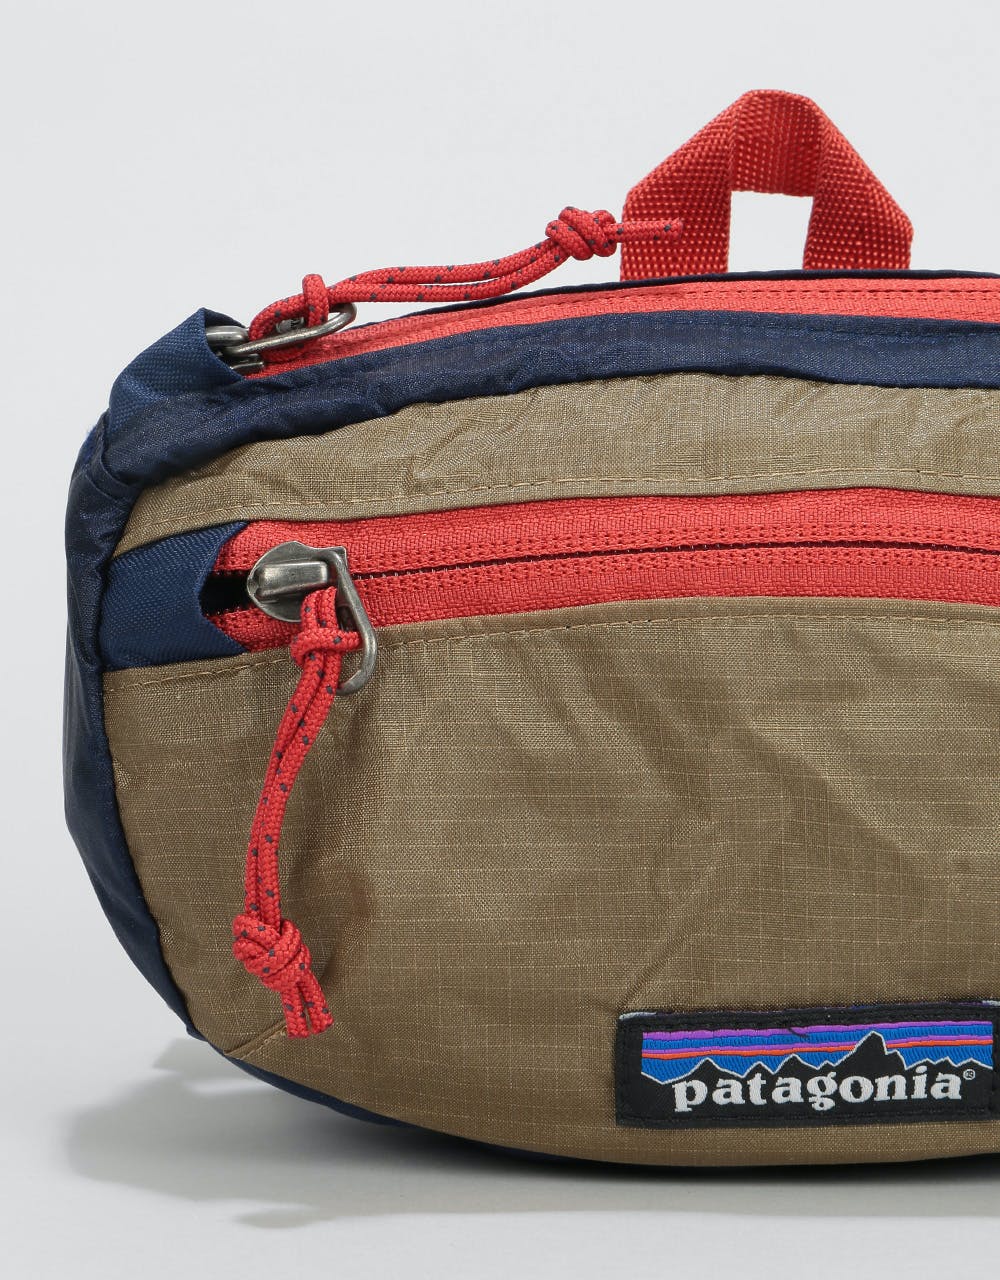 Patagonia Lightweight Travel Mini Cross Body Bag - Classic Navy/Khaki